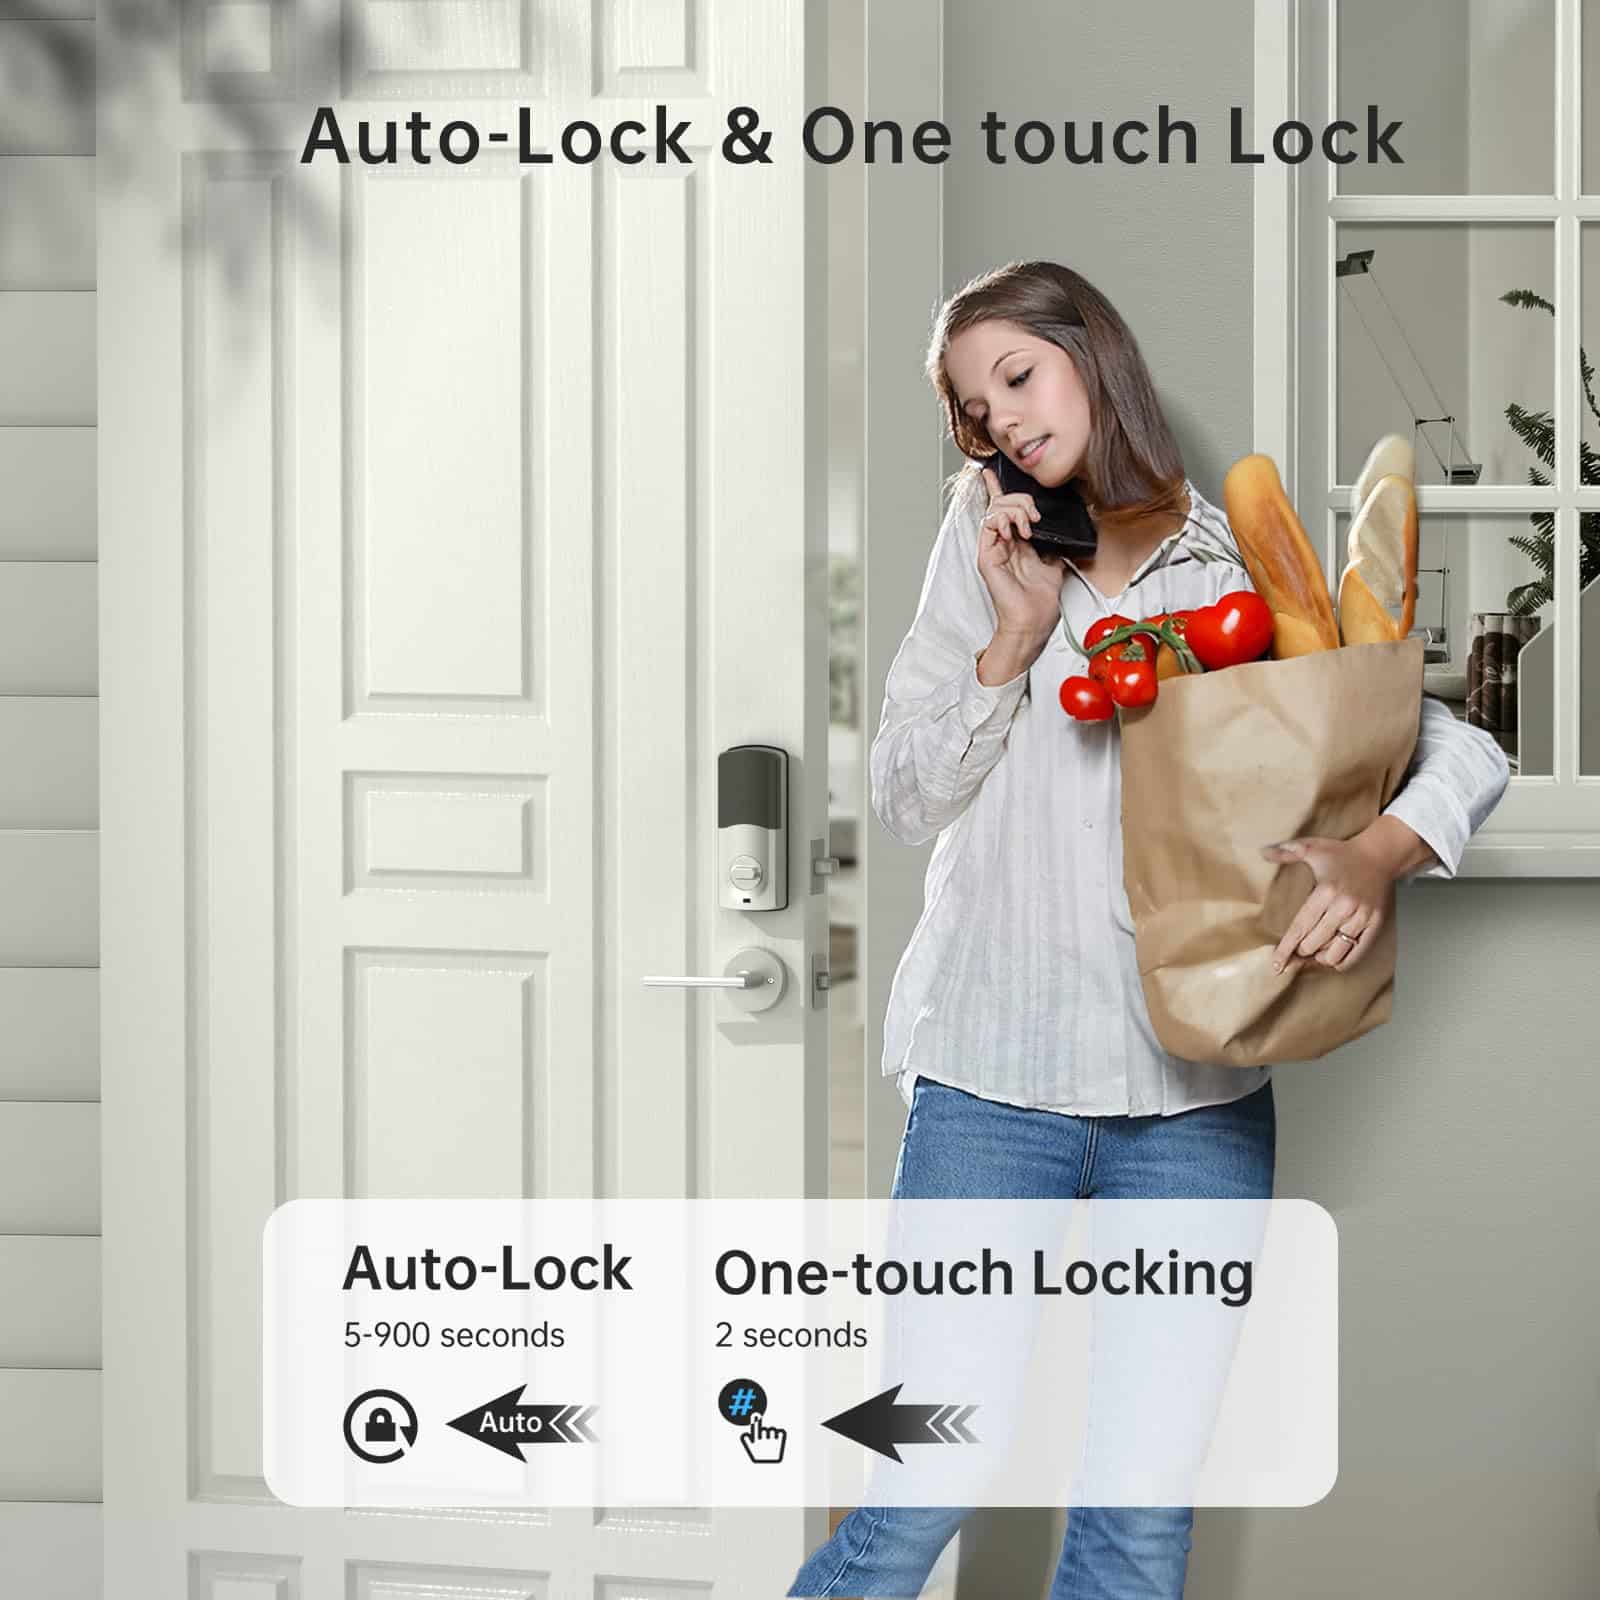 Auto-Locking